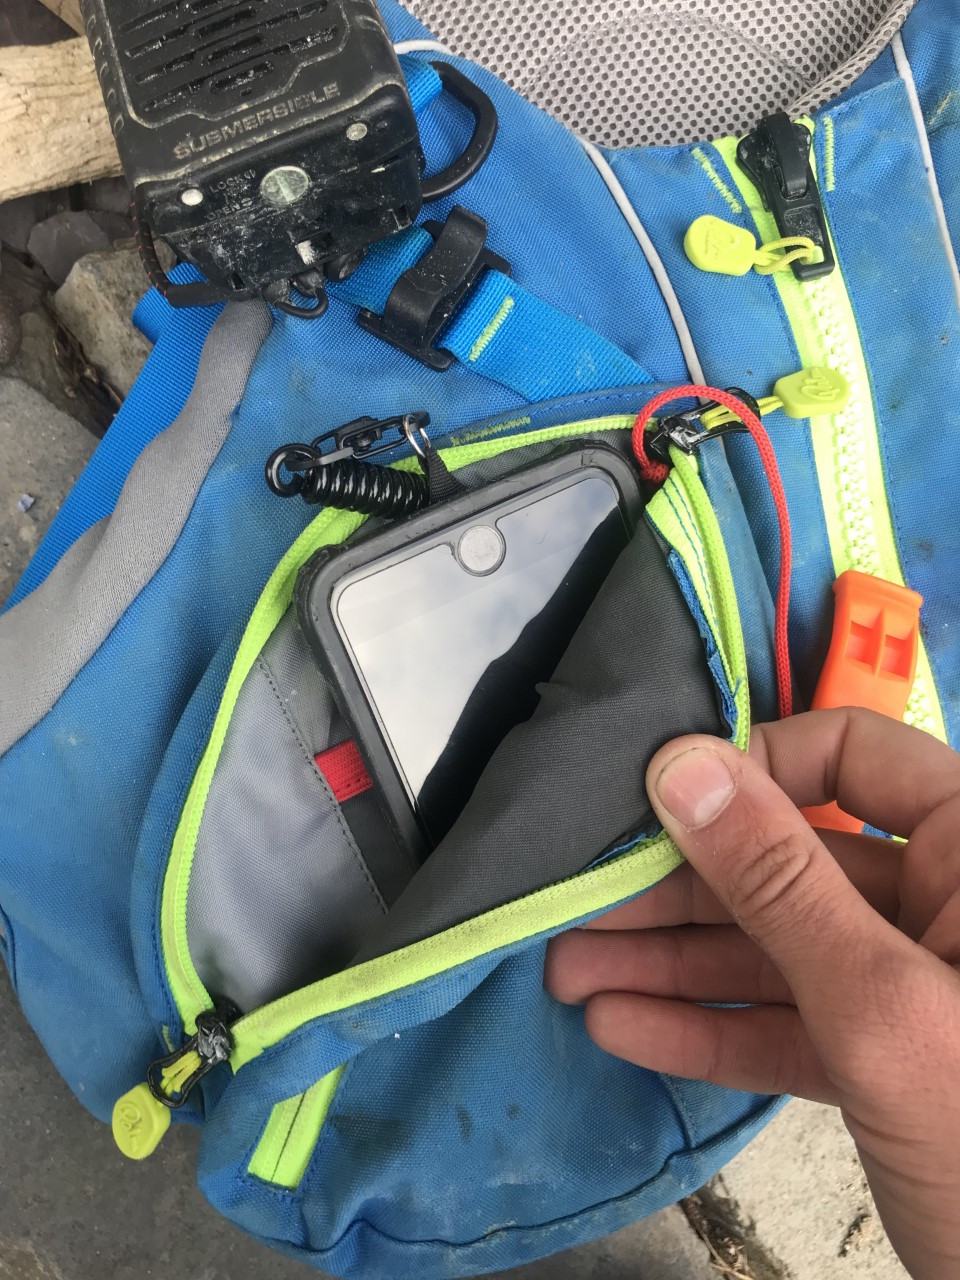 A mobile phone fits inside the Kaikoura pocket